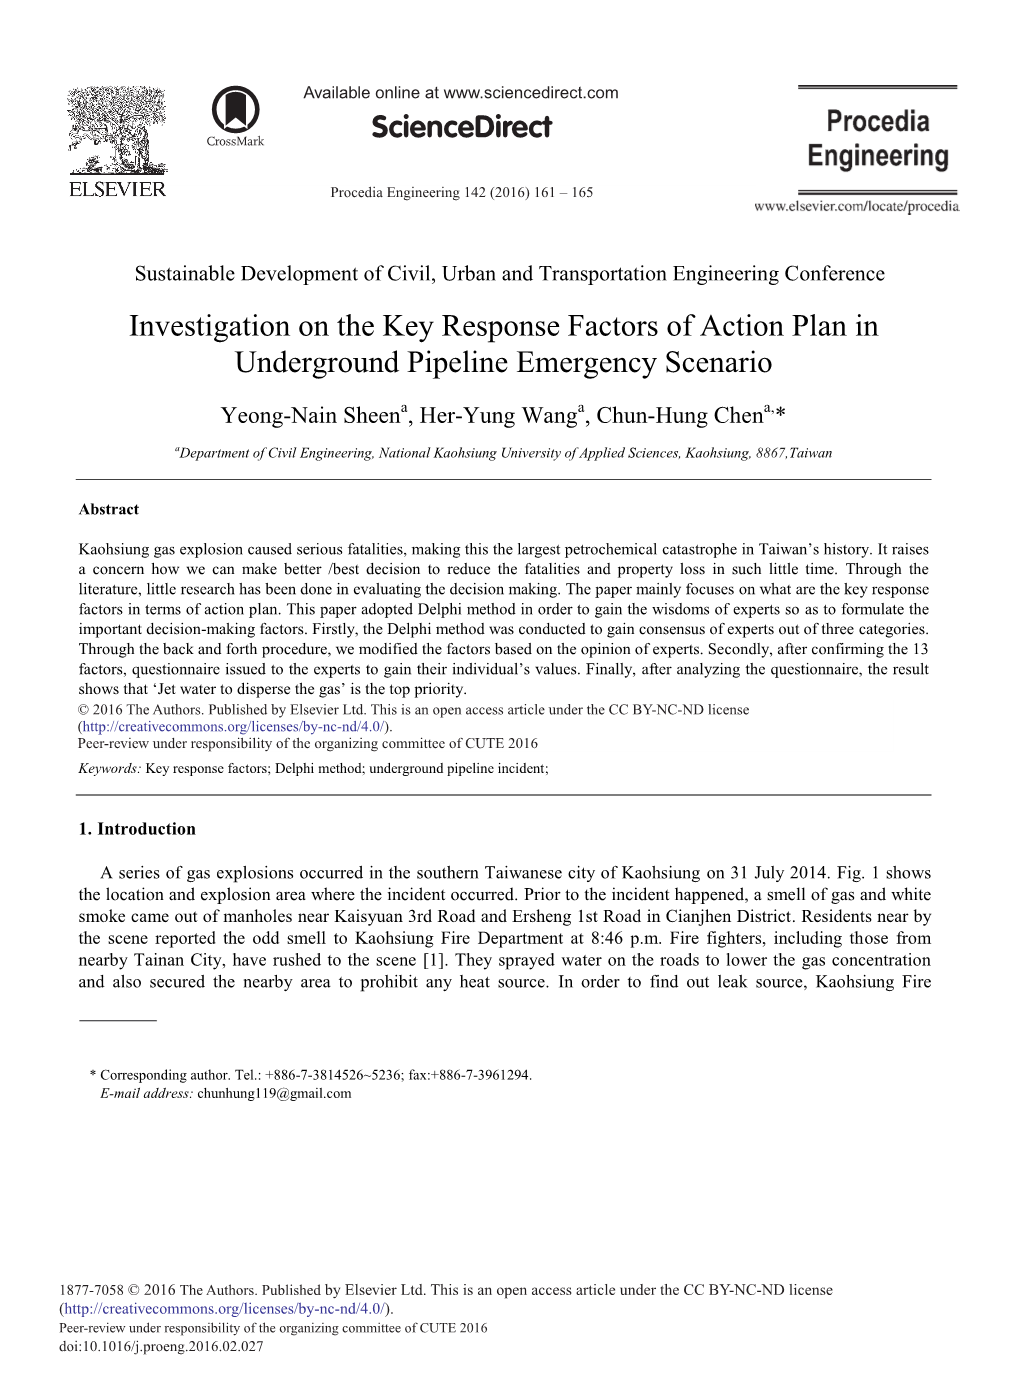 Investigation on the Key Response Factors of Action Plan in Underground Pipeline Emergency Scenario